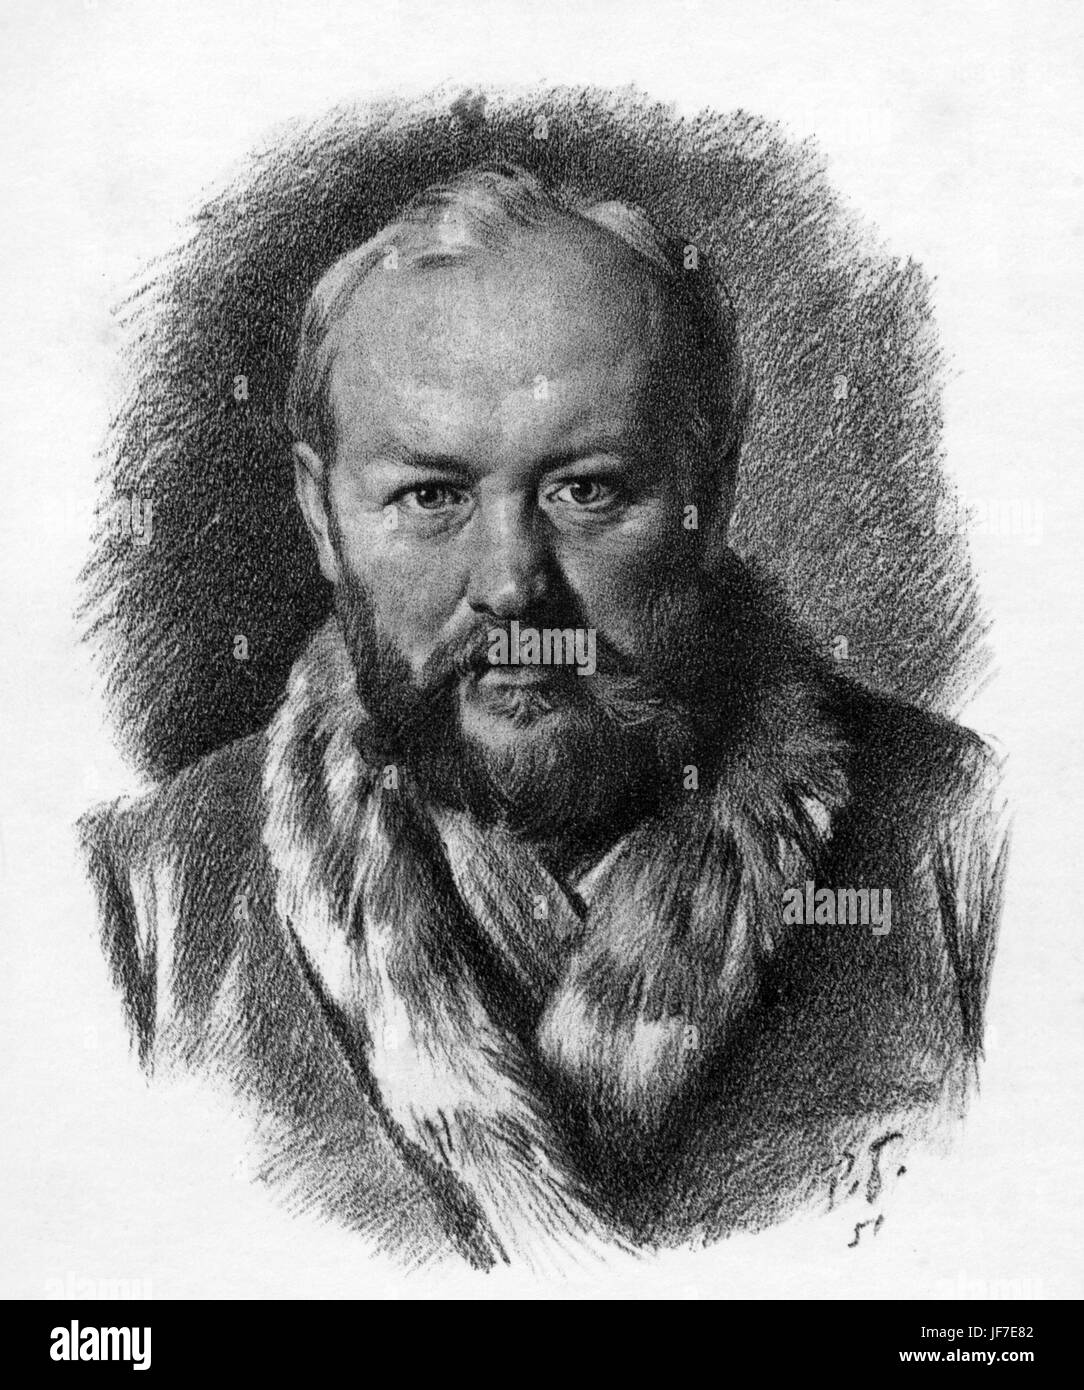 Alexander Nikolaevich Ostrovsky - Porträt des russischen Autors. 1823-1886. Autor Groza (der Sturm) und Les (Wald). Stockfoto